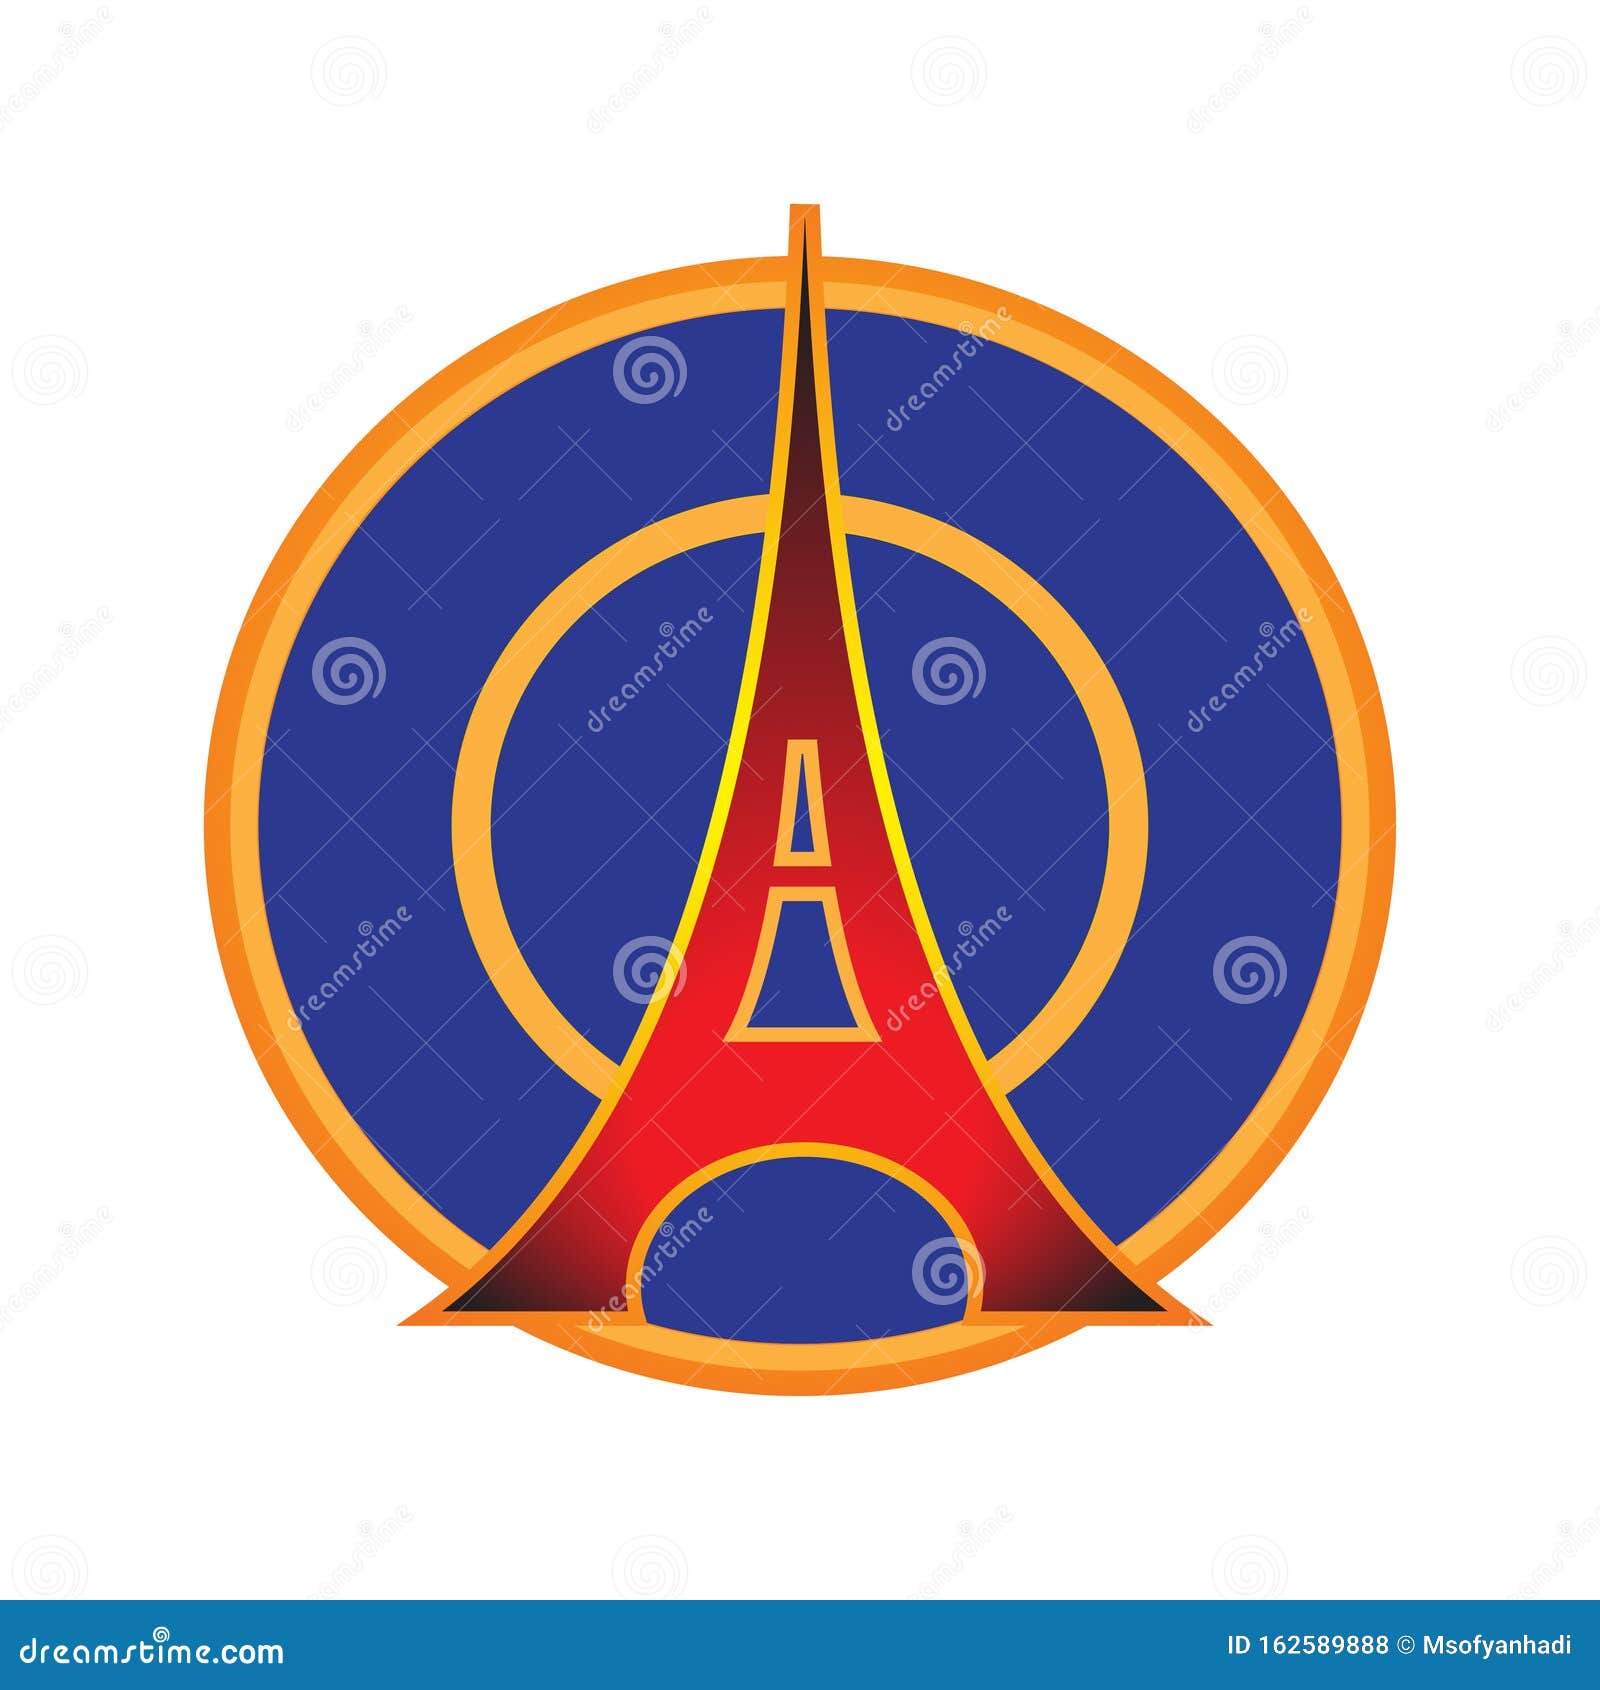 Paris Saint Germain Logo Design Stock Vector ...